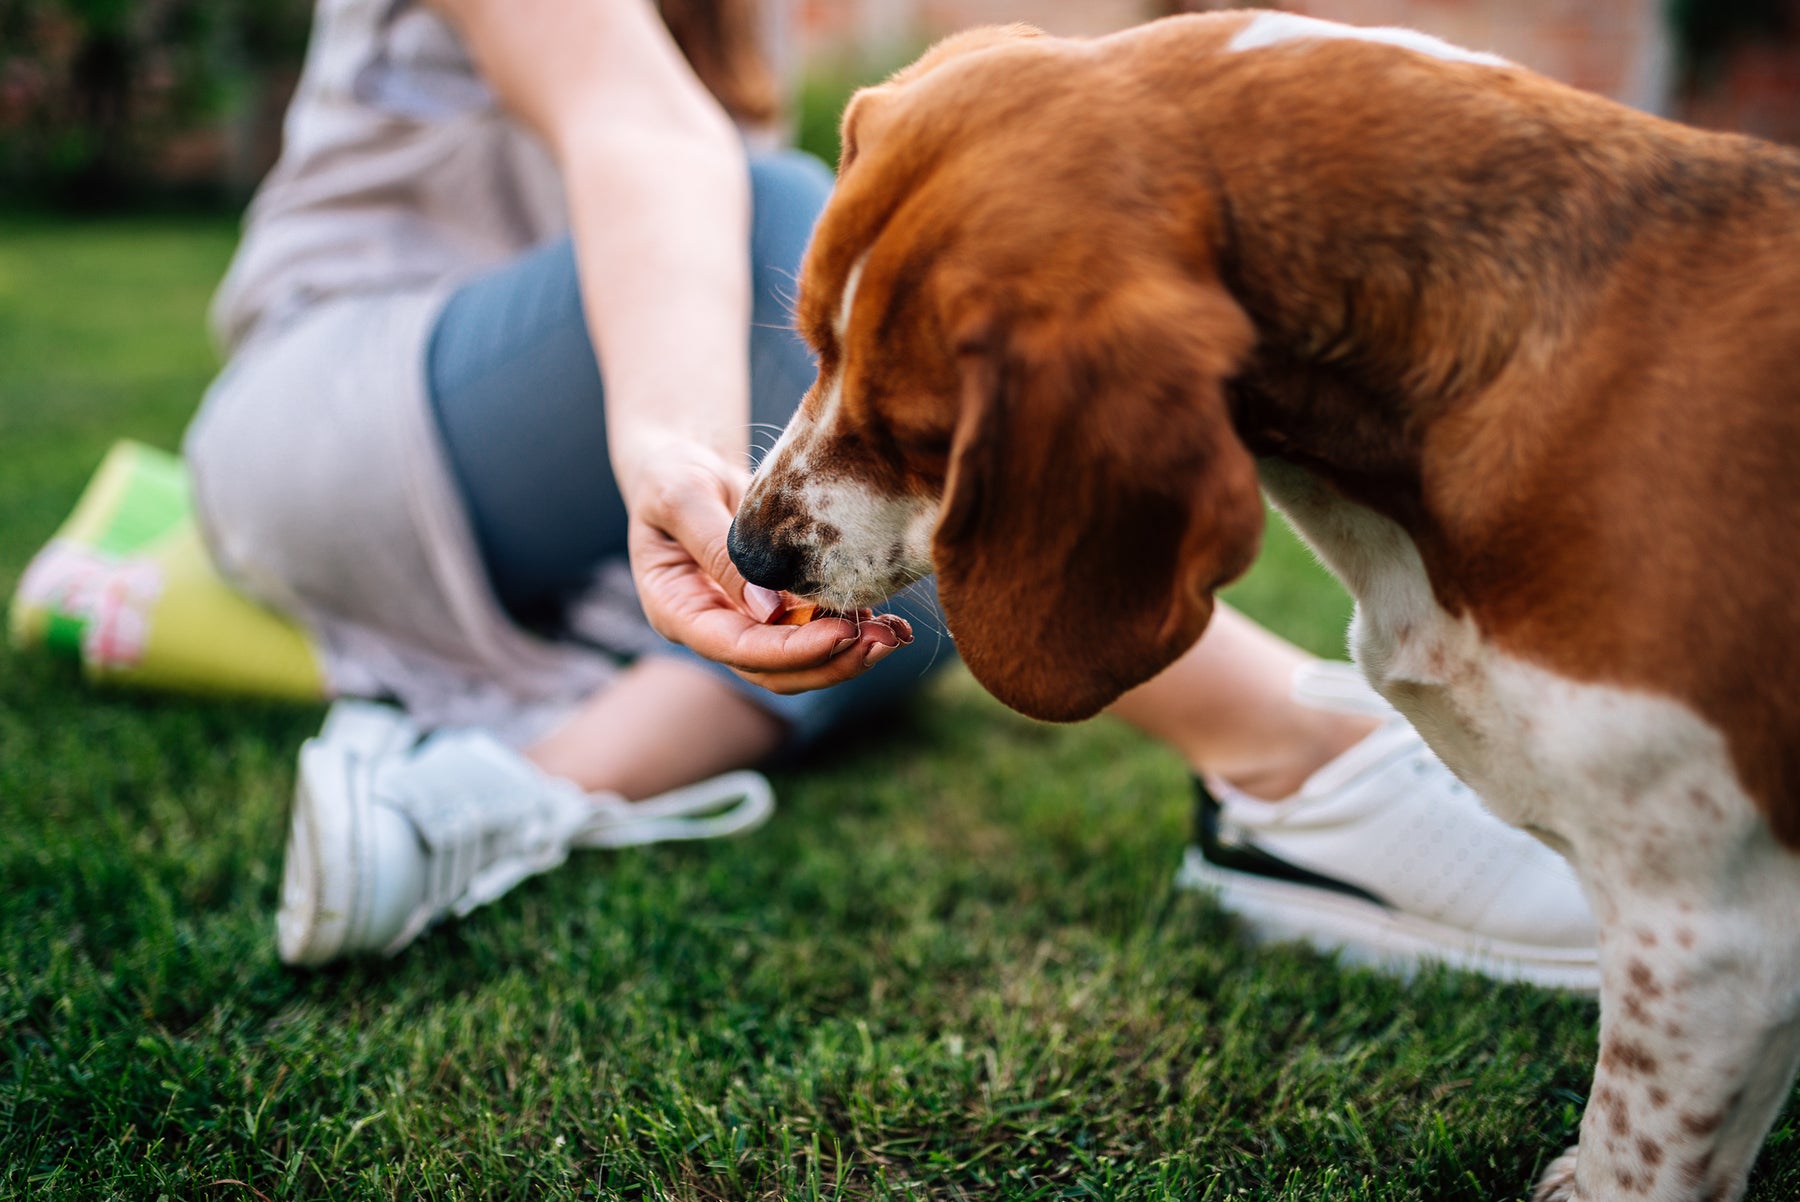 Should I be feeding 'human' food and treats to my dog?